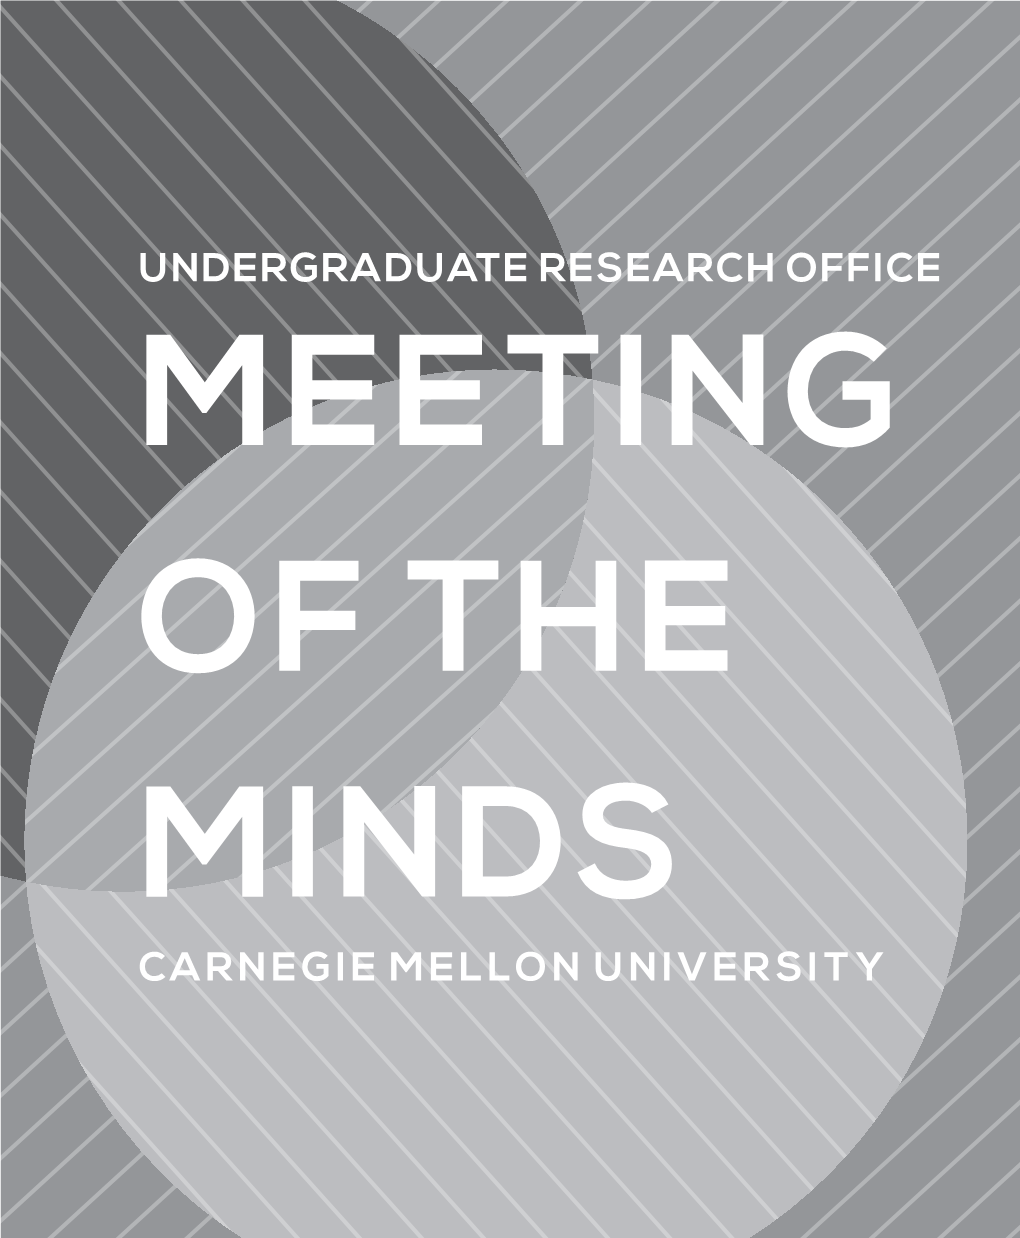 Undergraduate Research Office Carnegie Mellon University